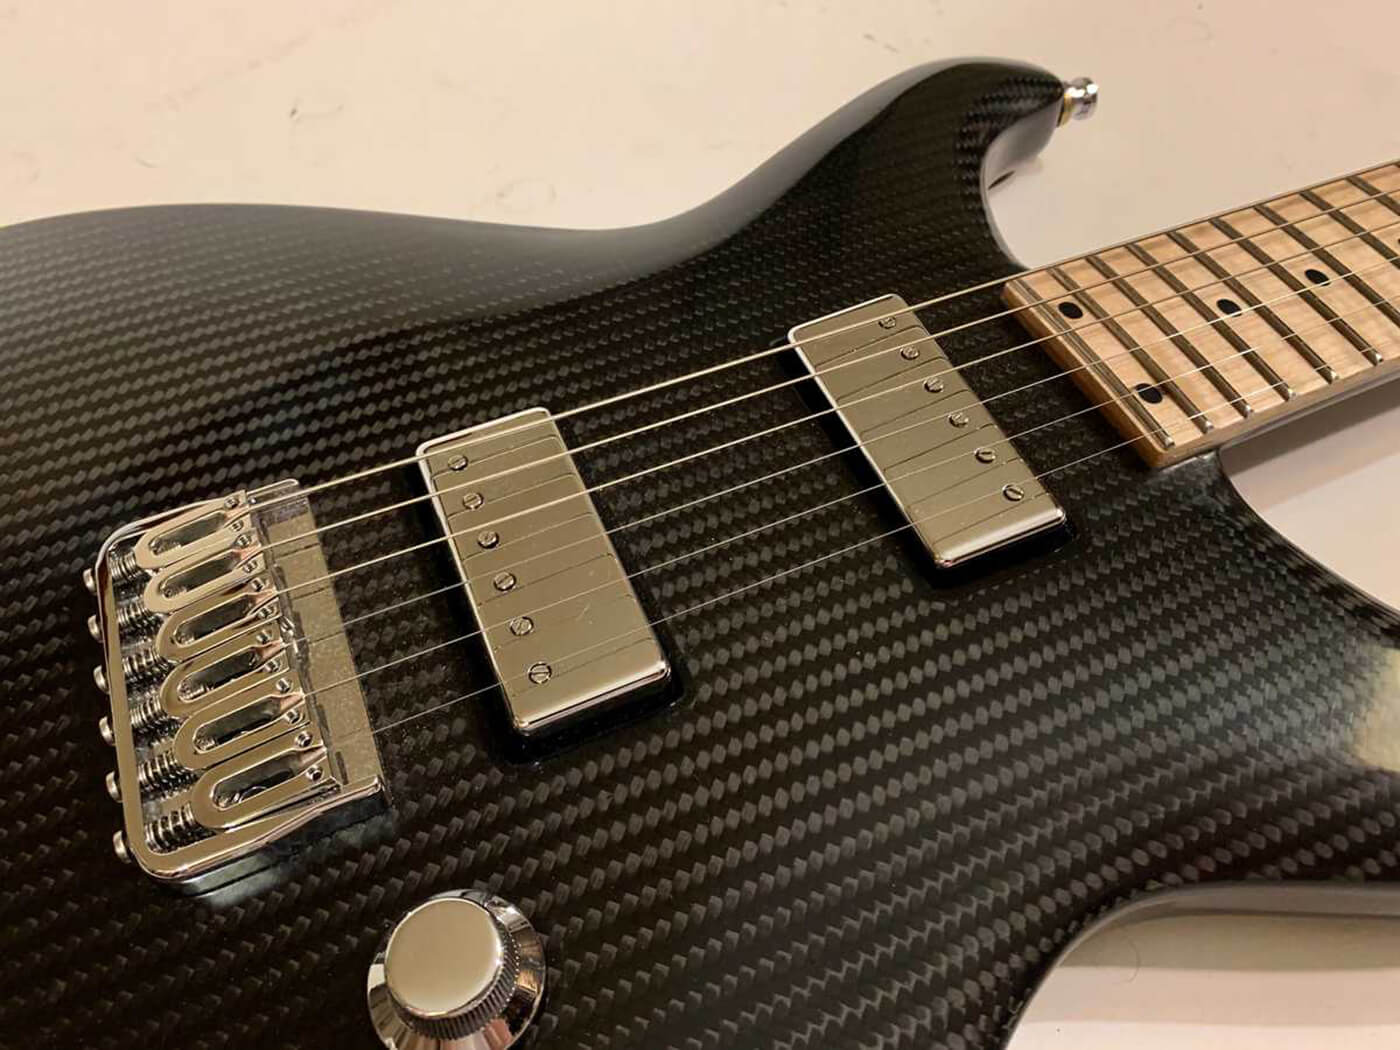 Rubato's new Lassie guitar is a carbon fibre beauty